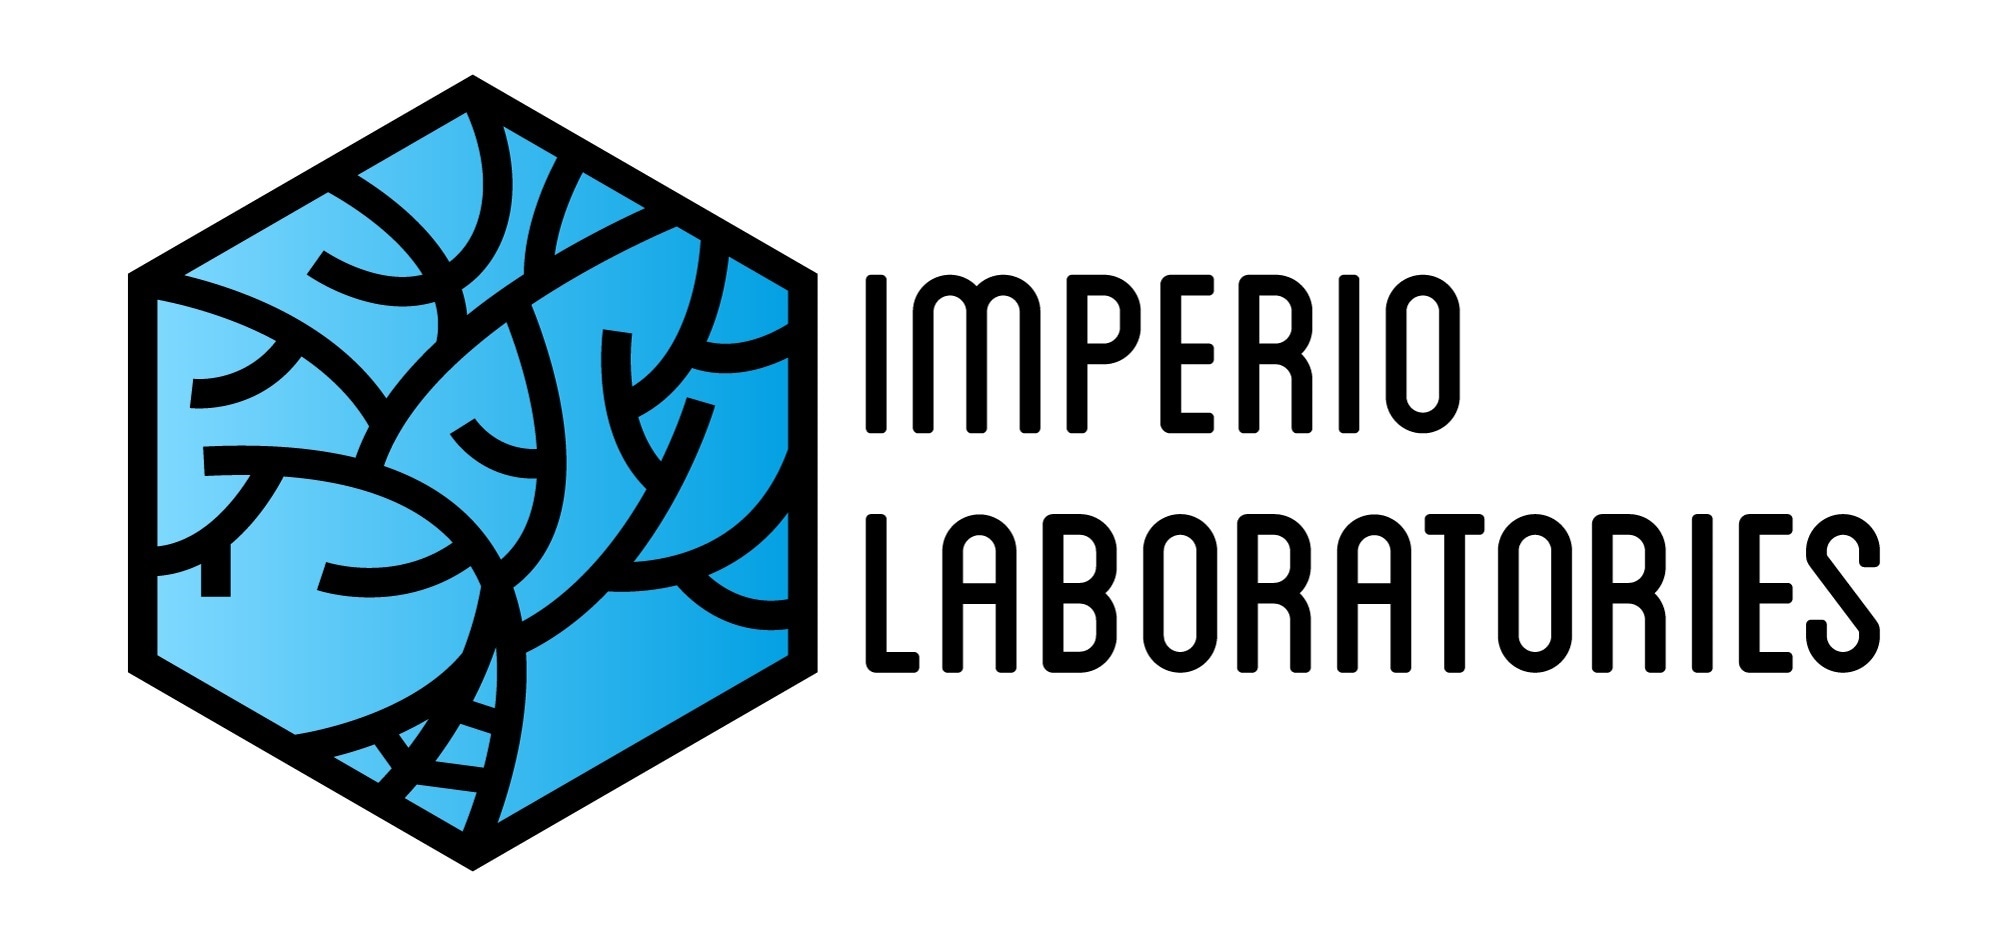 Imperio Laboratories Sp. z o.o. logo.